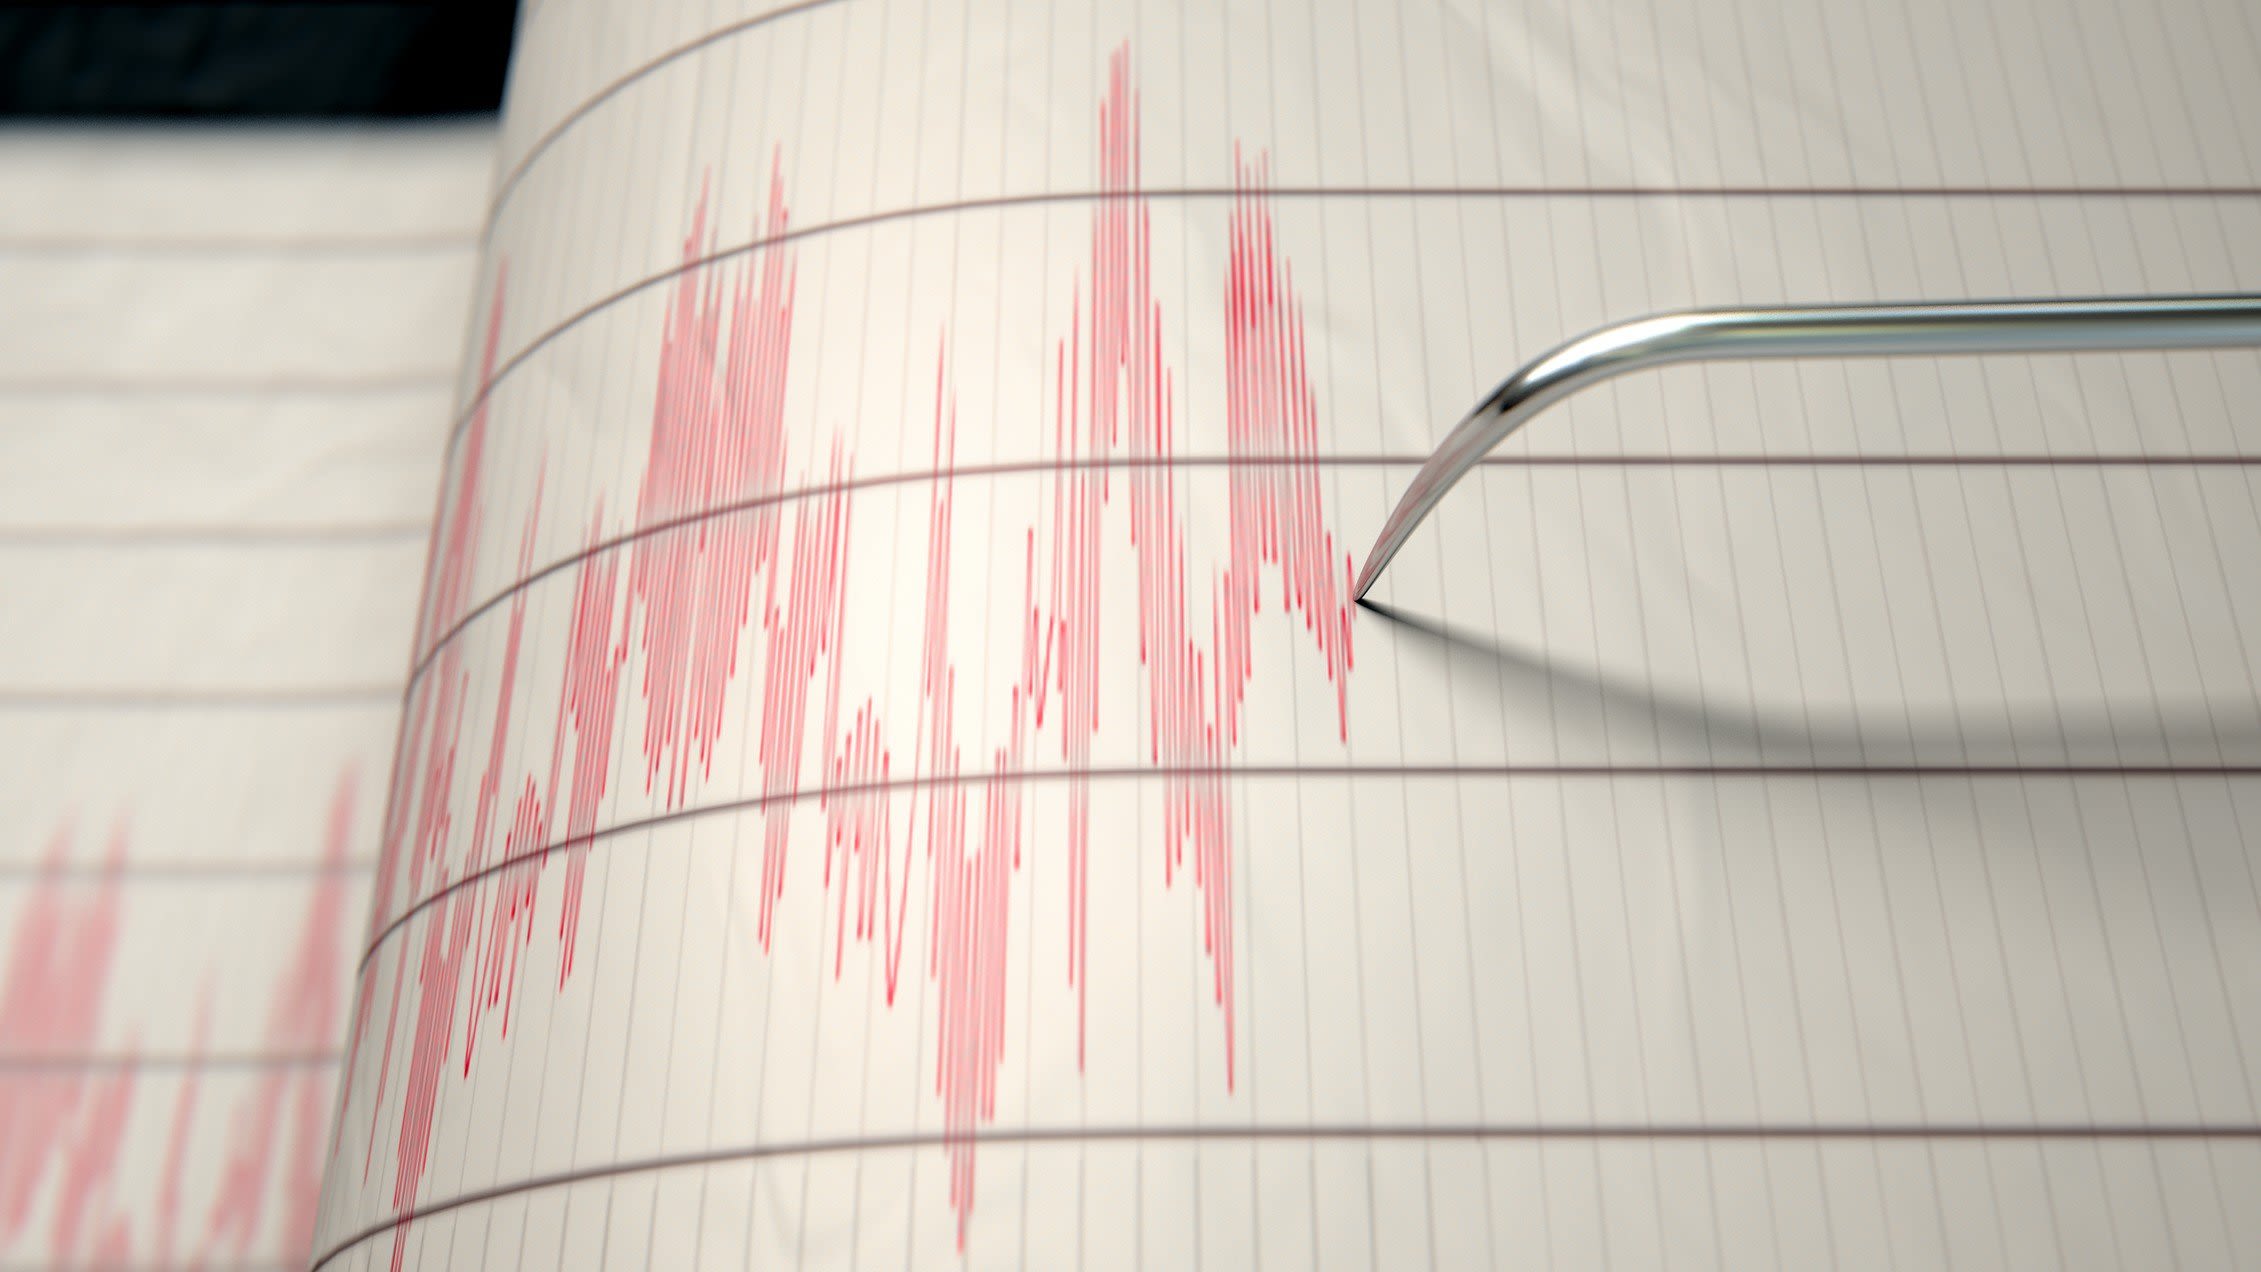 Preliminary magnitude 3.6 earthquake rattles Newport Beach, aftershock follows